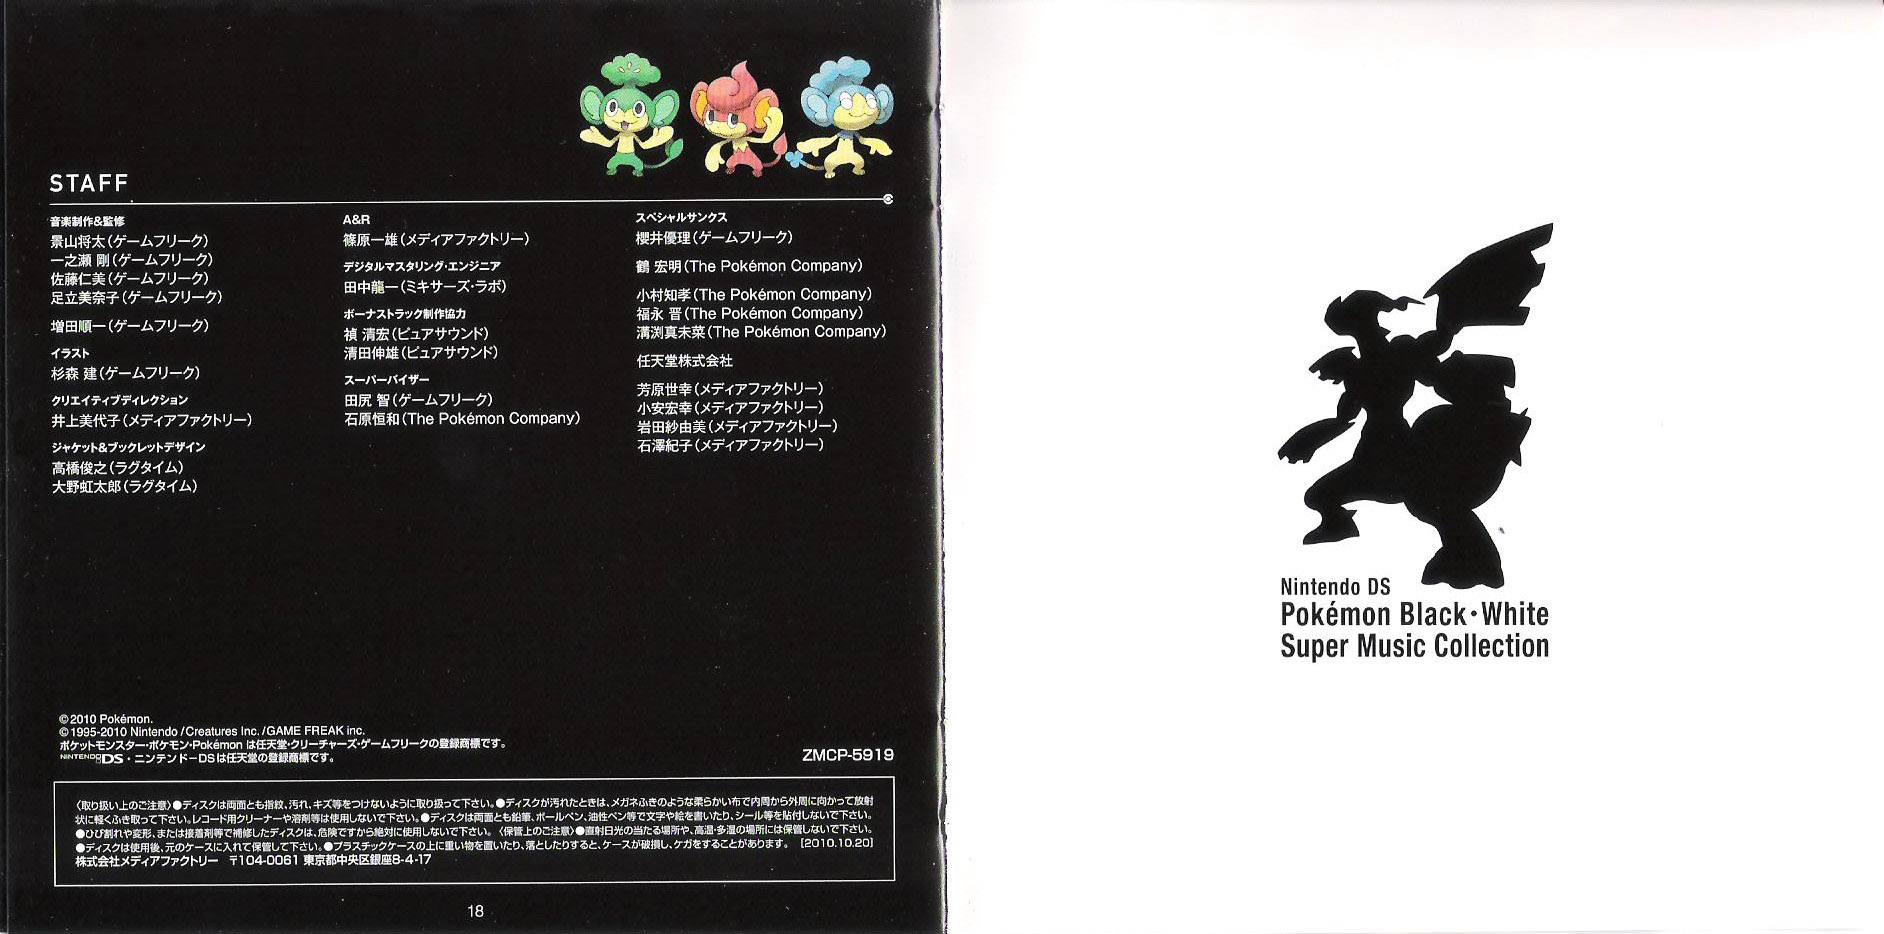 Release ニンテンドーds ポケモンブラック ホワイト スーパーミュージックコレクション By Various Artists Cover Art Musicbrainz